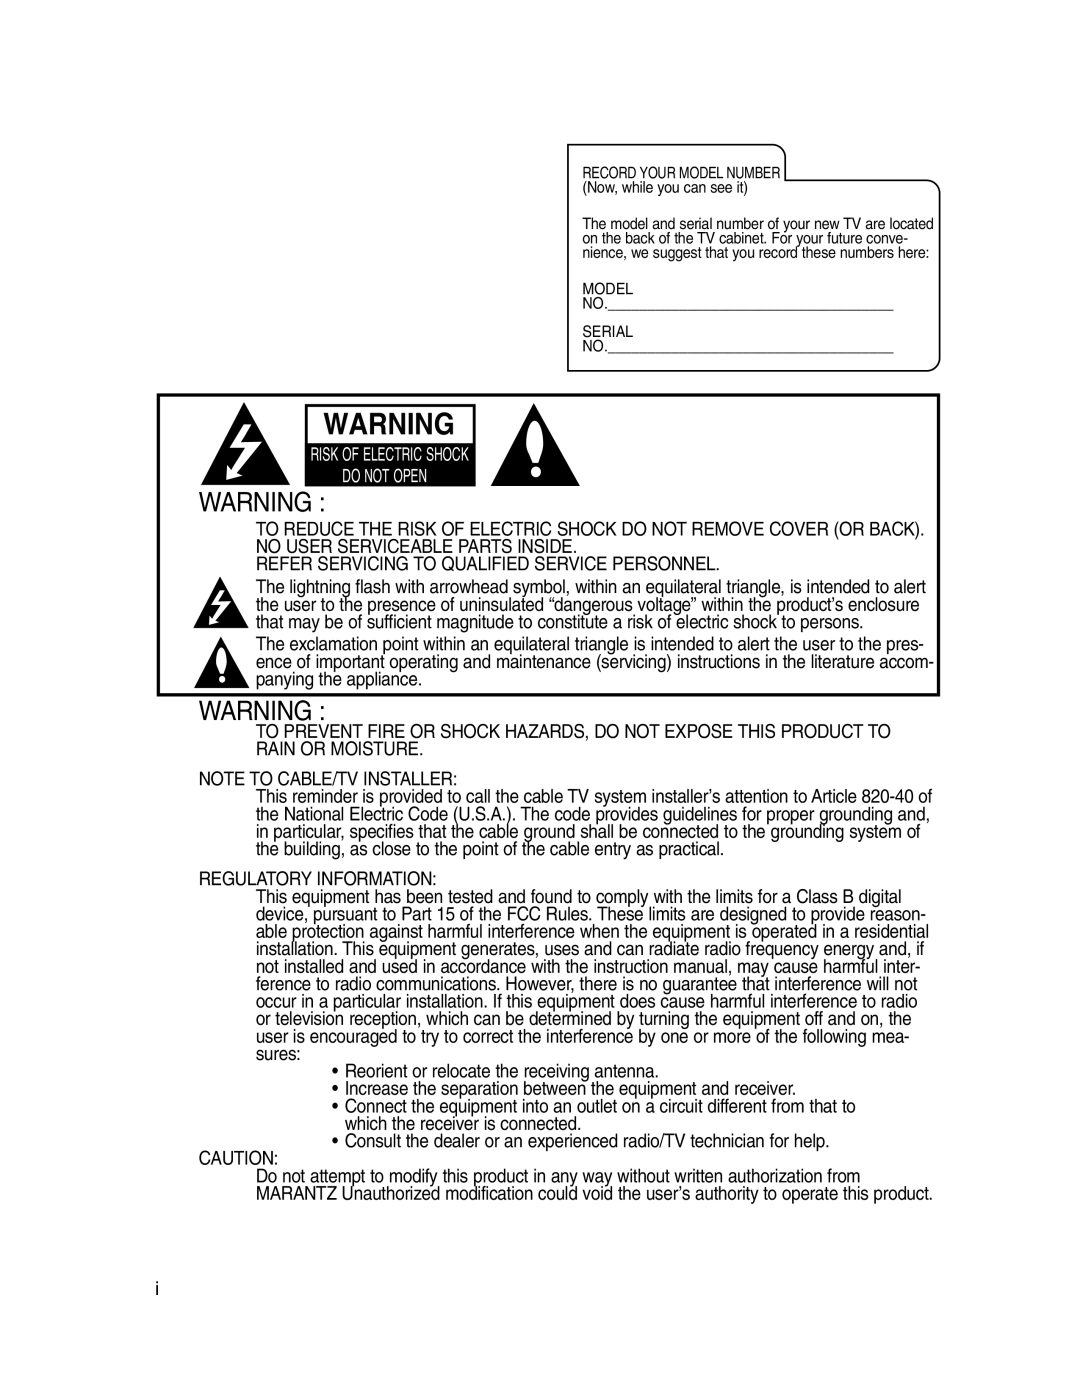 Marantz LC1510 manual Risk of Electric Shock Do not Open 